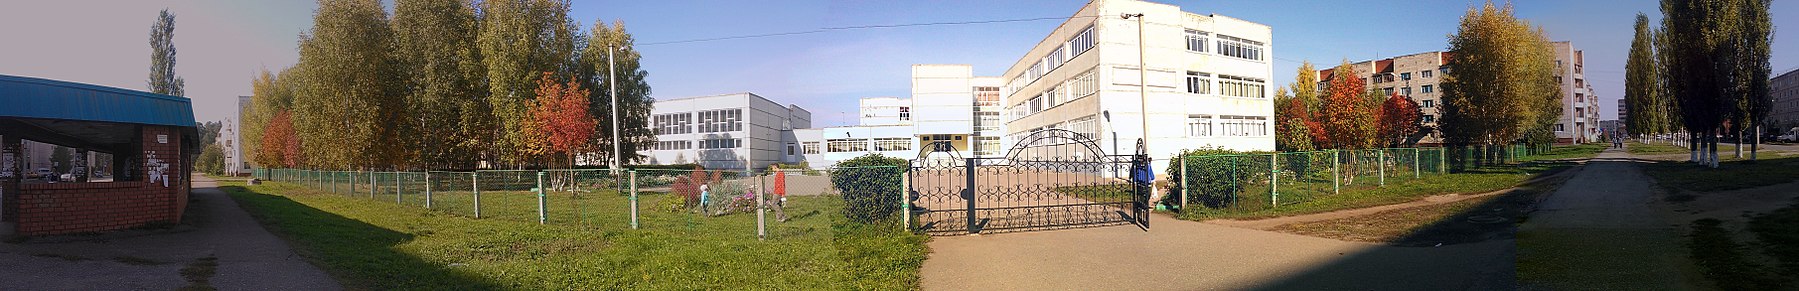 Škola 13 g. Neftekamsk - panoramamio.jpg